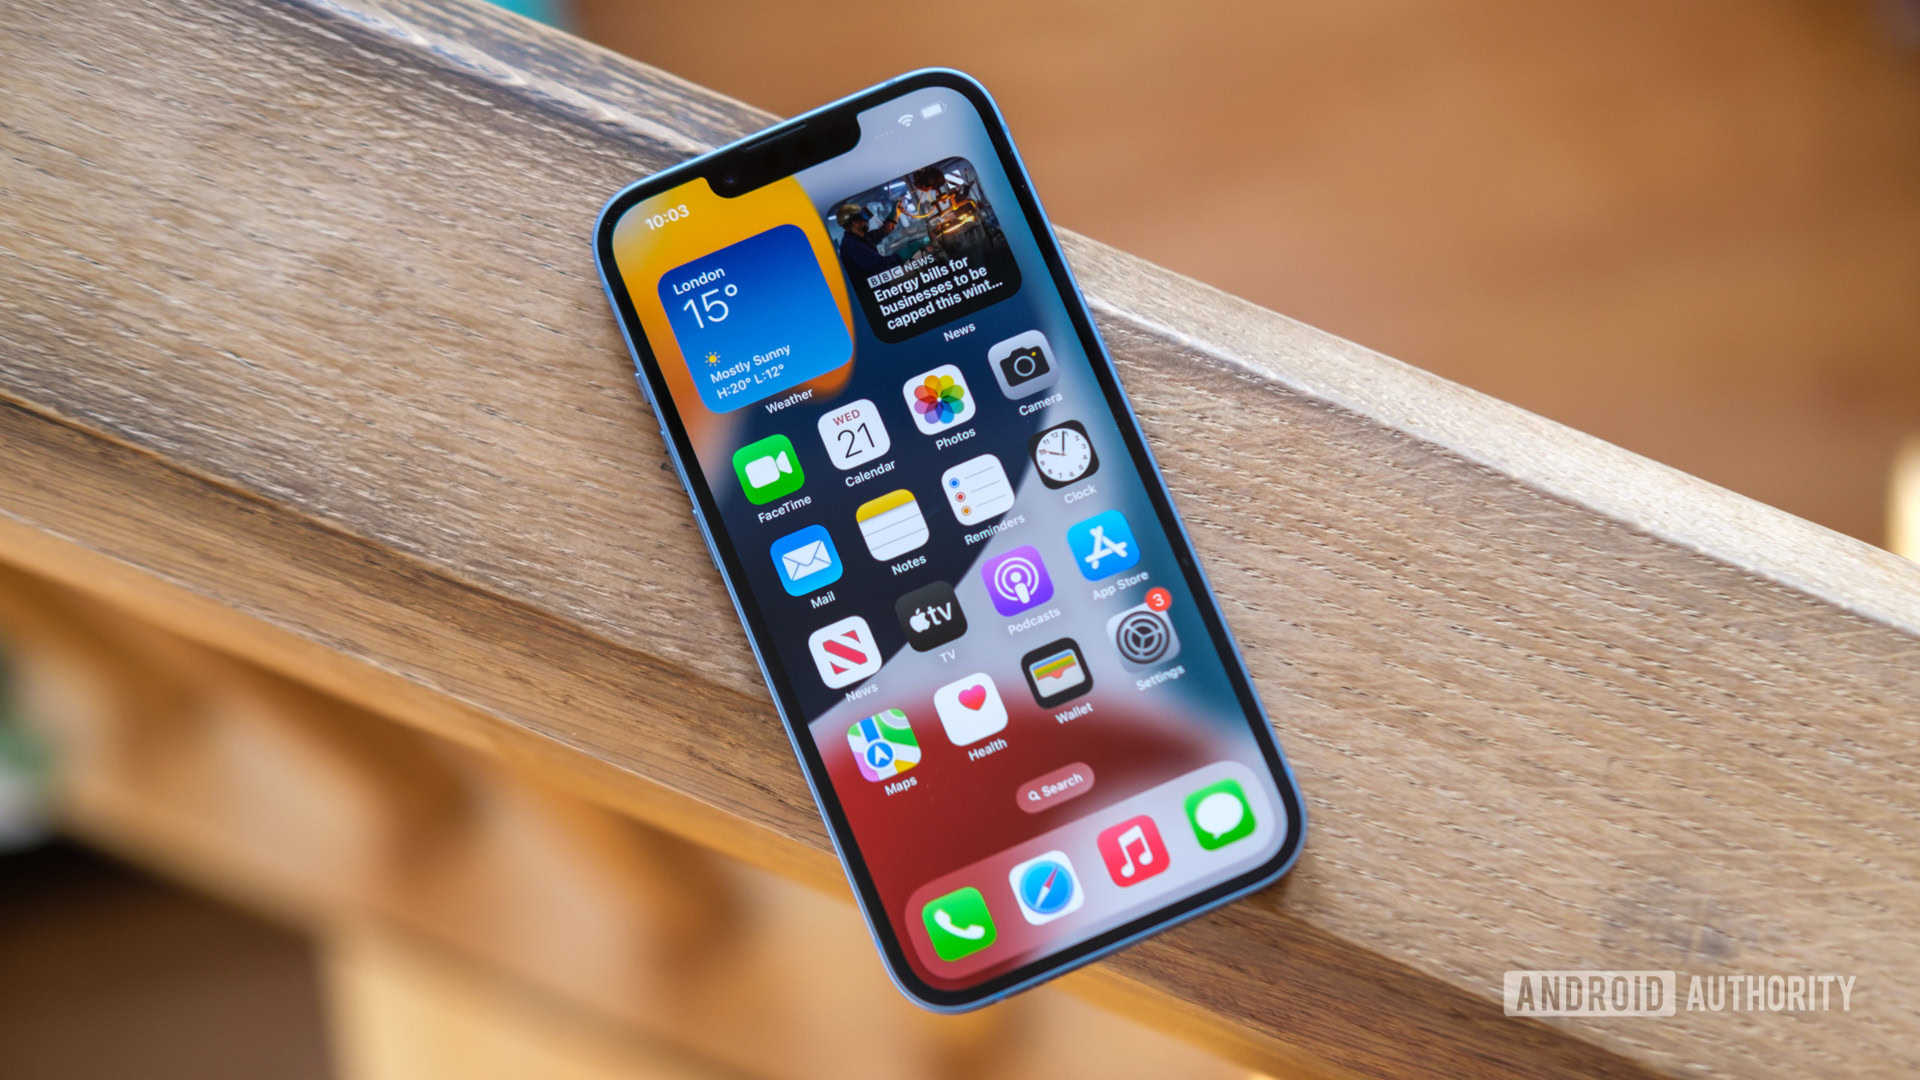 Apple iPhone 14 - Price, Specs & Reviews